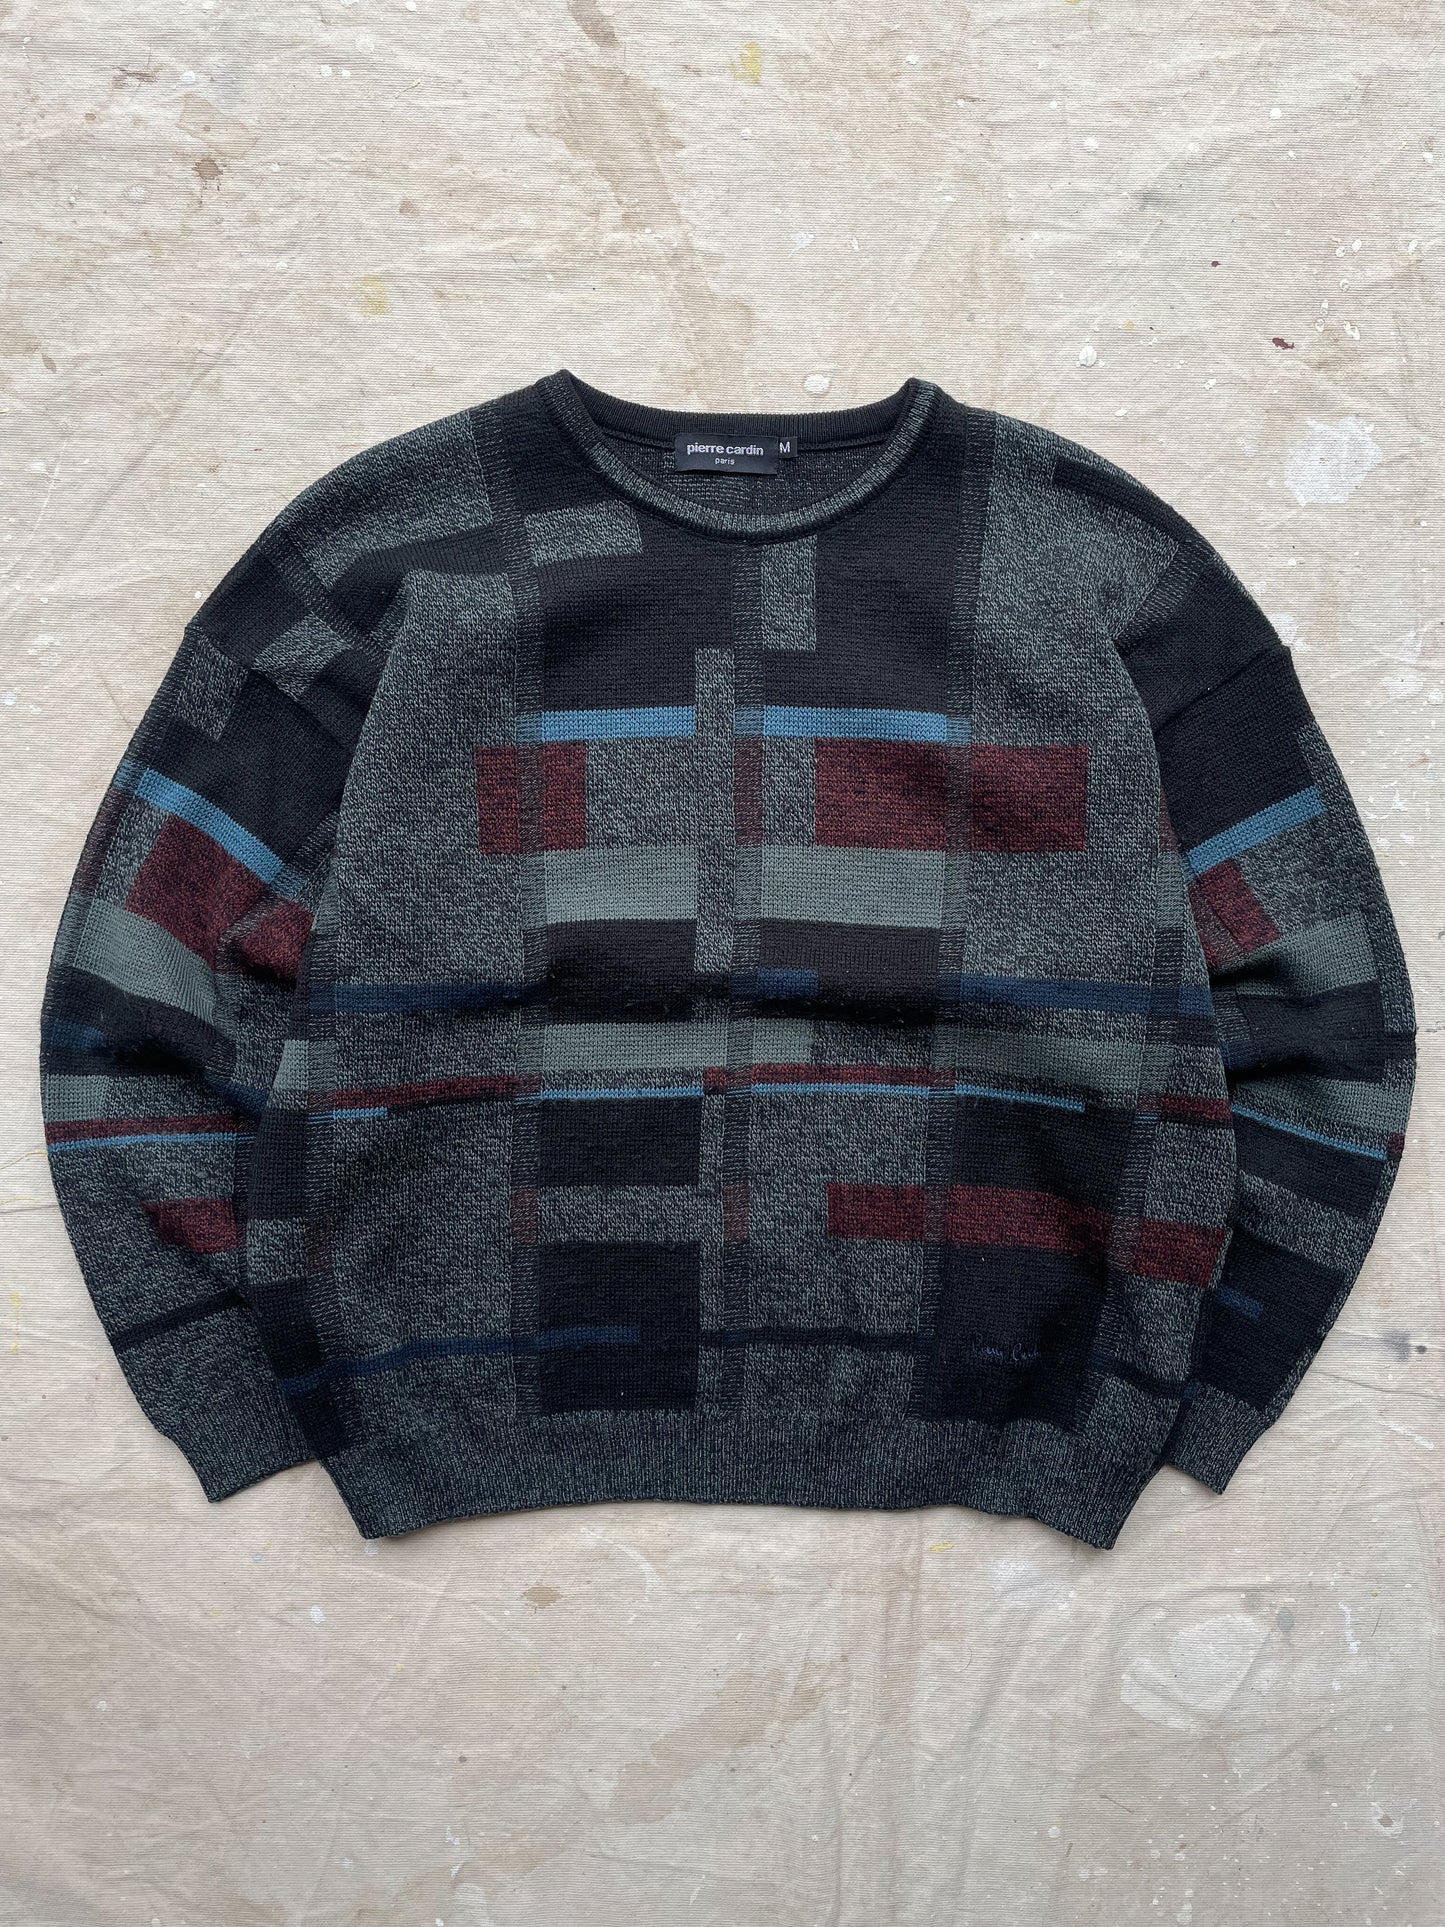 Geometric Sweater—[M]